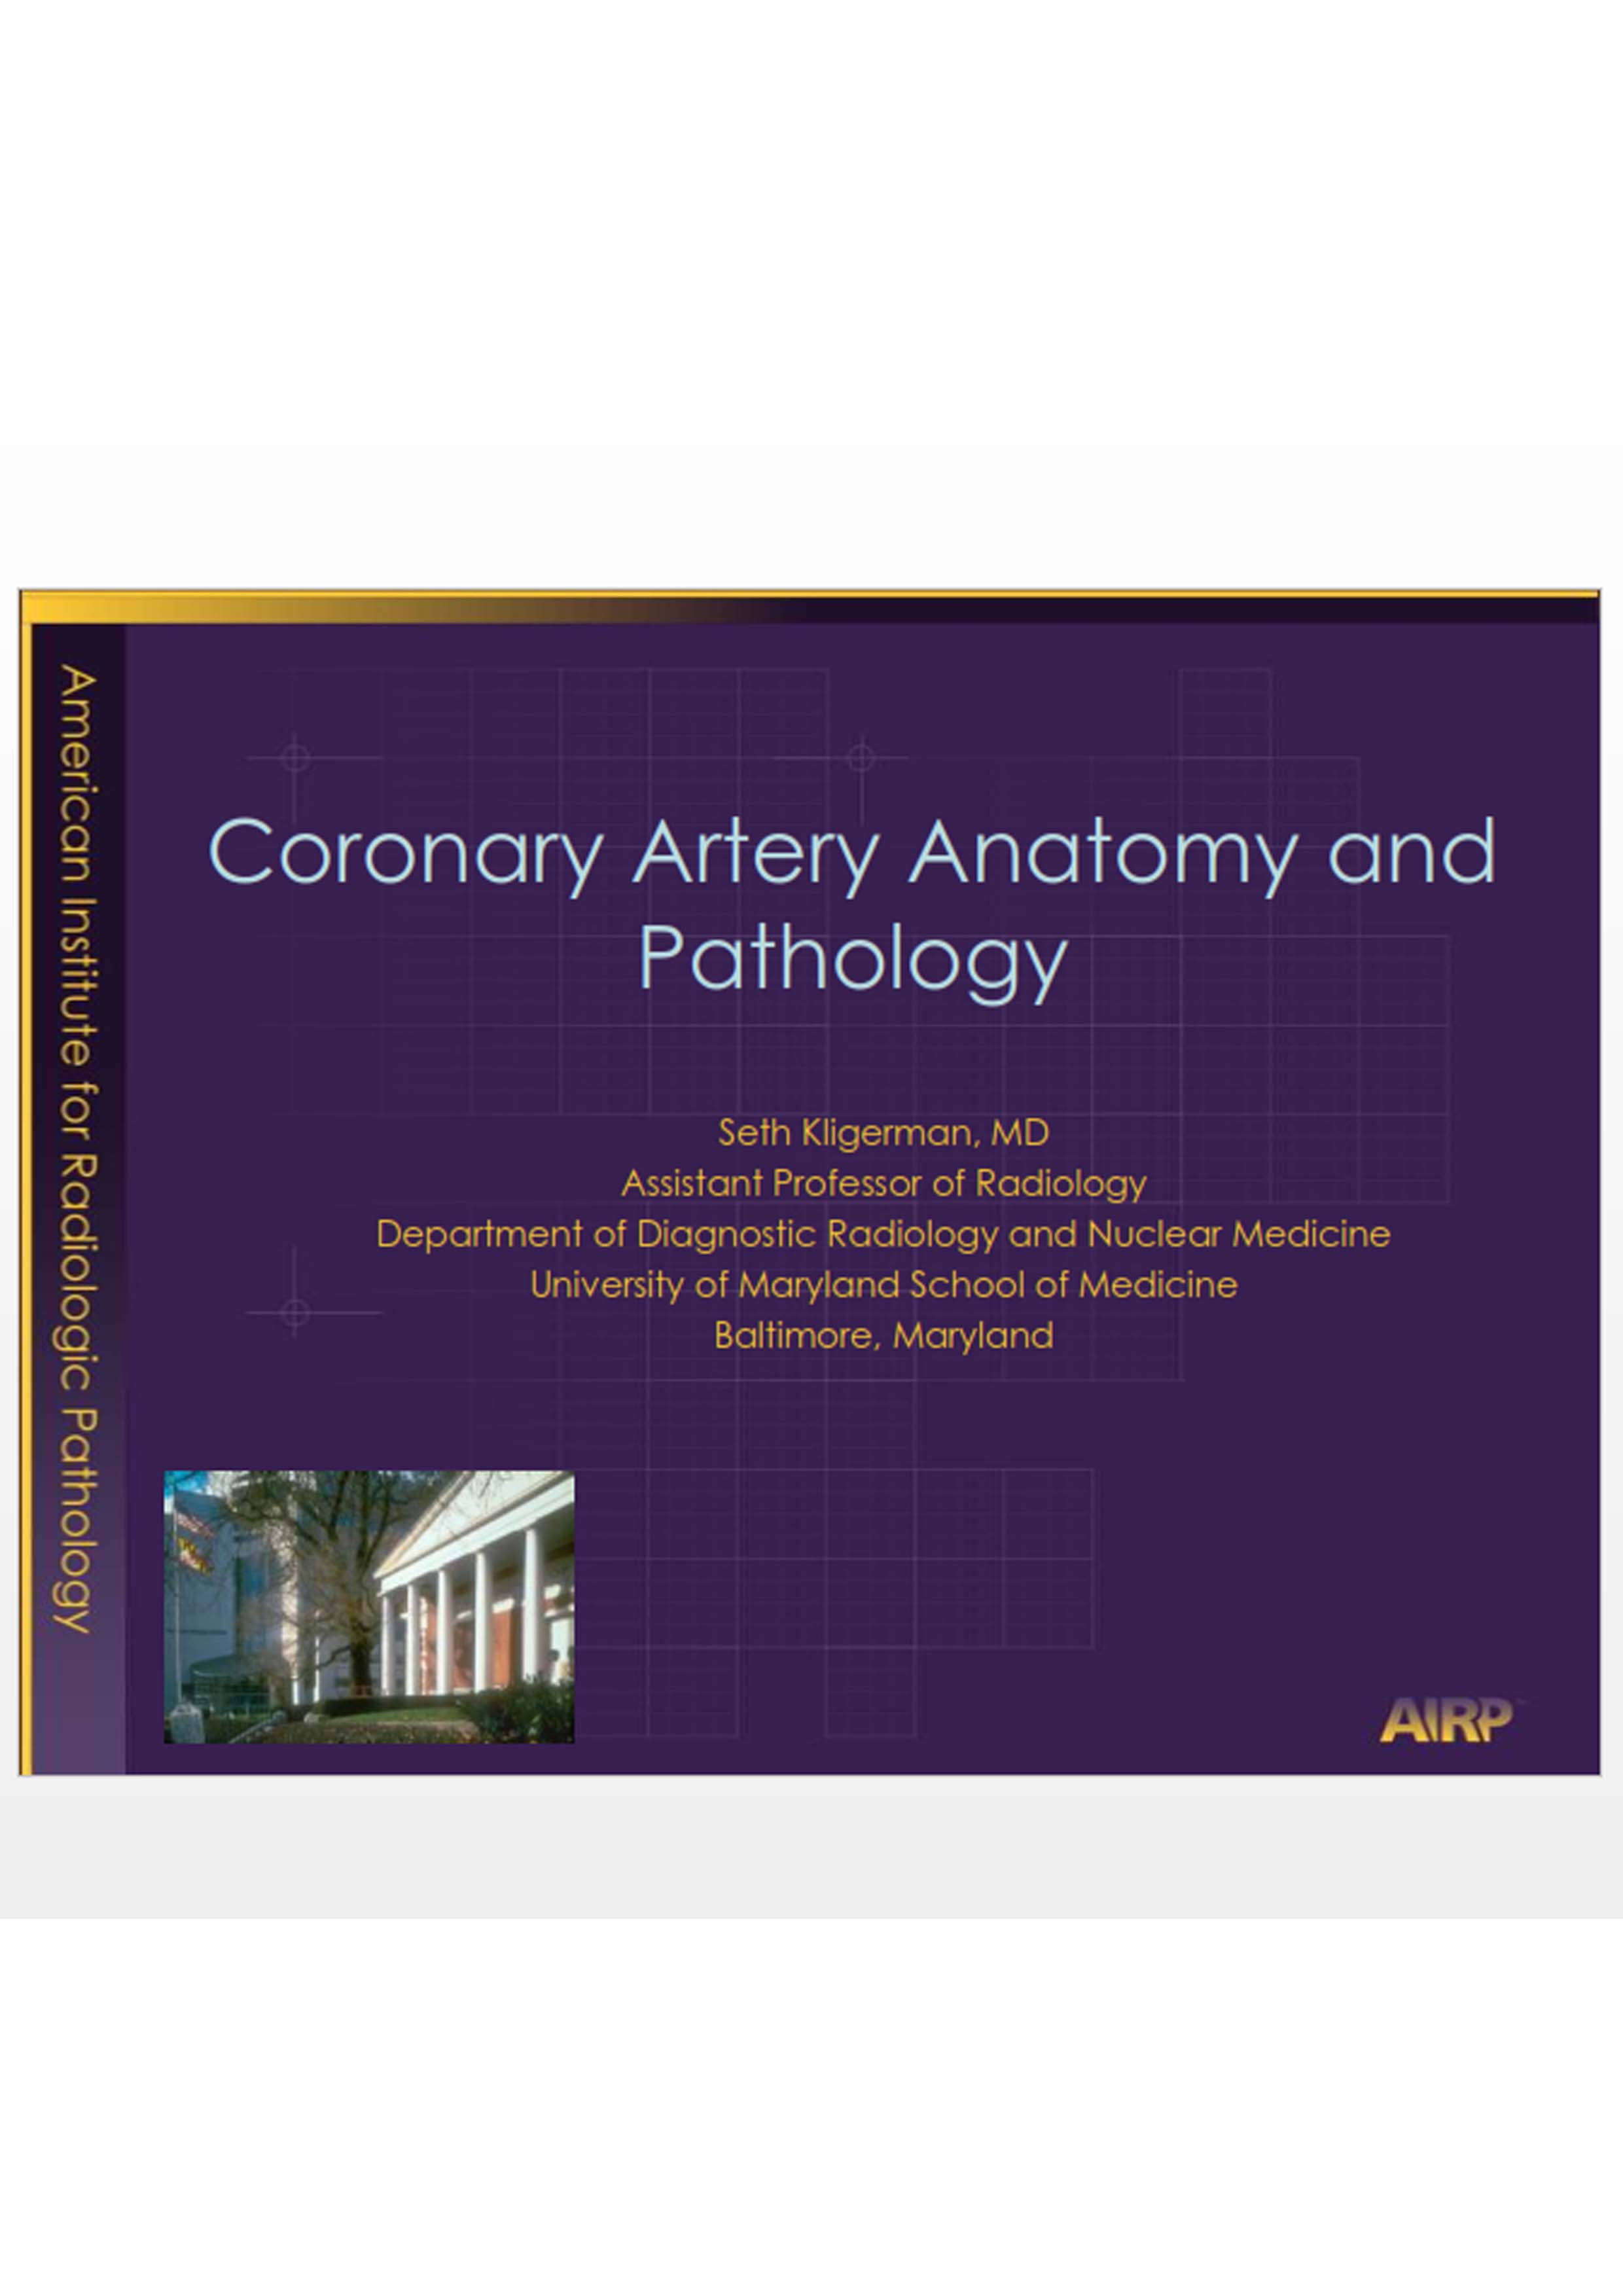 T15 - Seth Kligerman - Coronary Artery Anatomy and Congenital Anomalies Variants - AIRP 2013